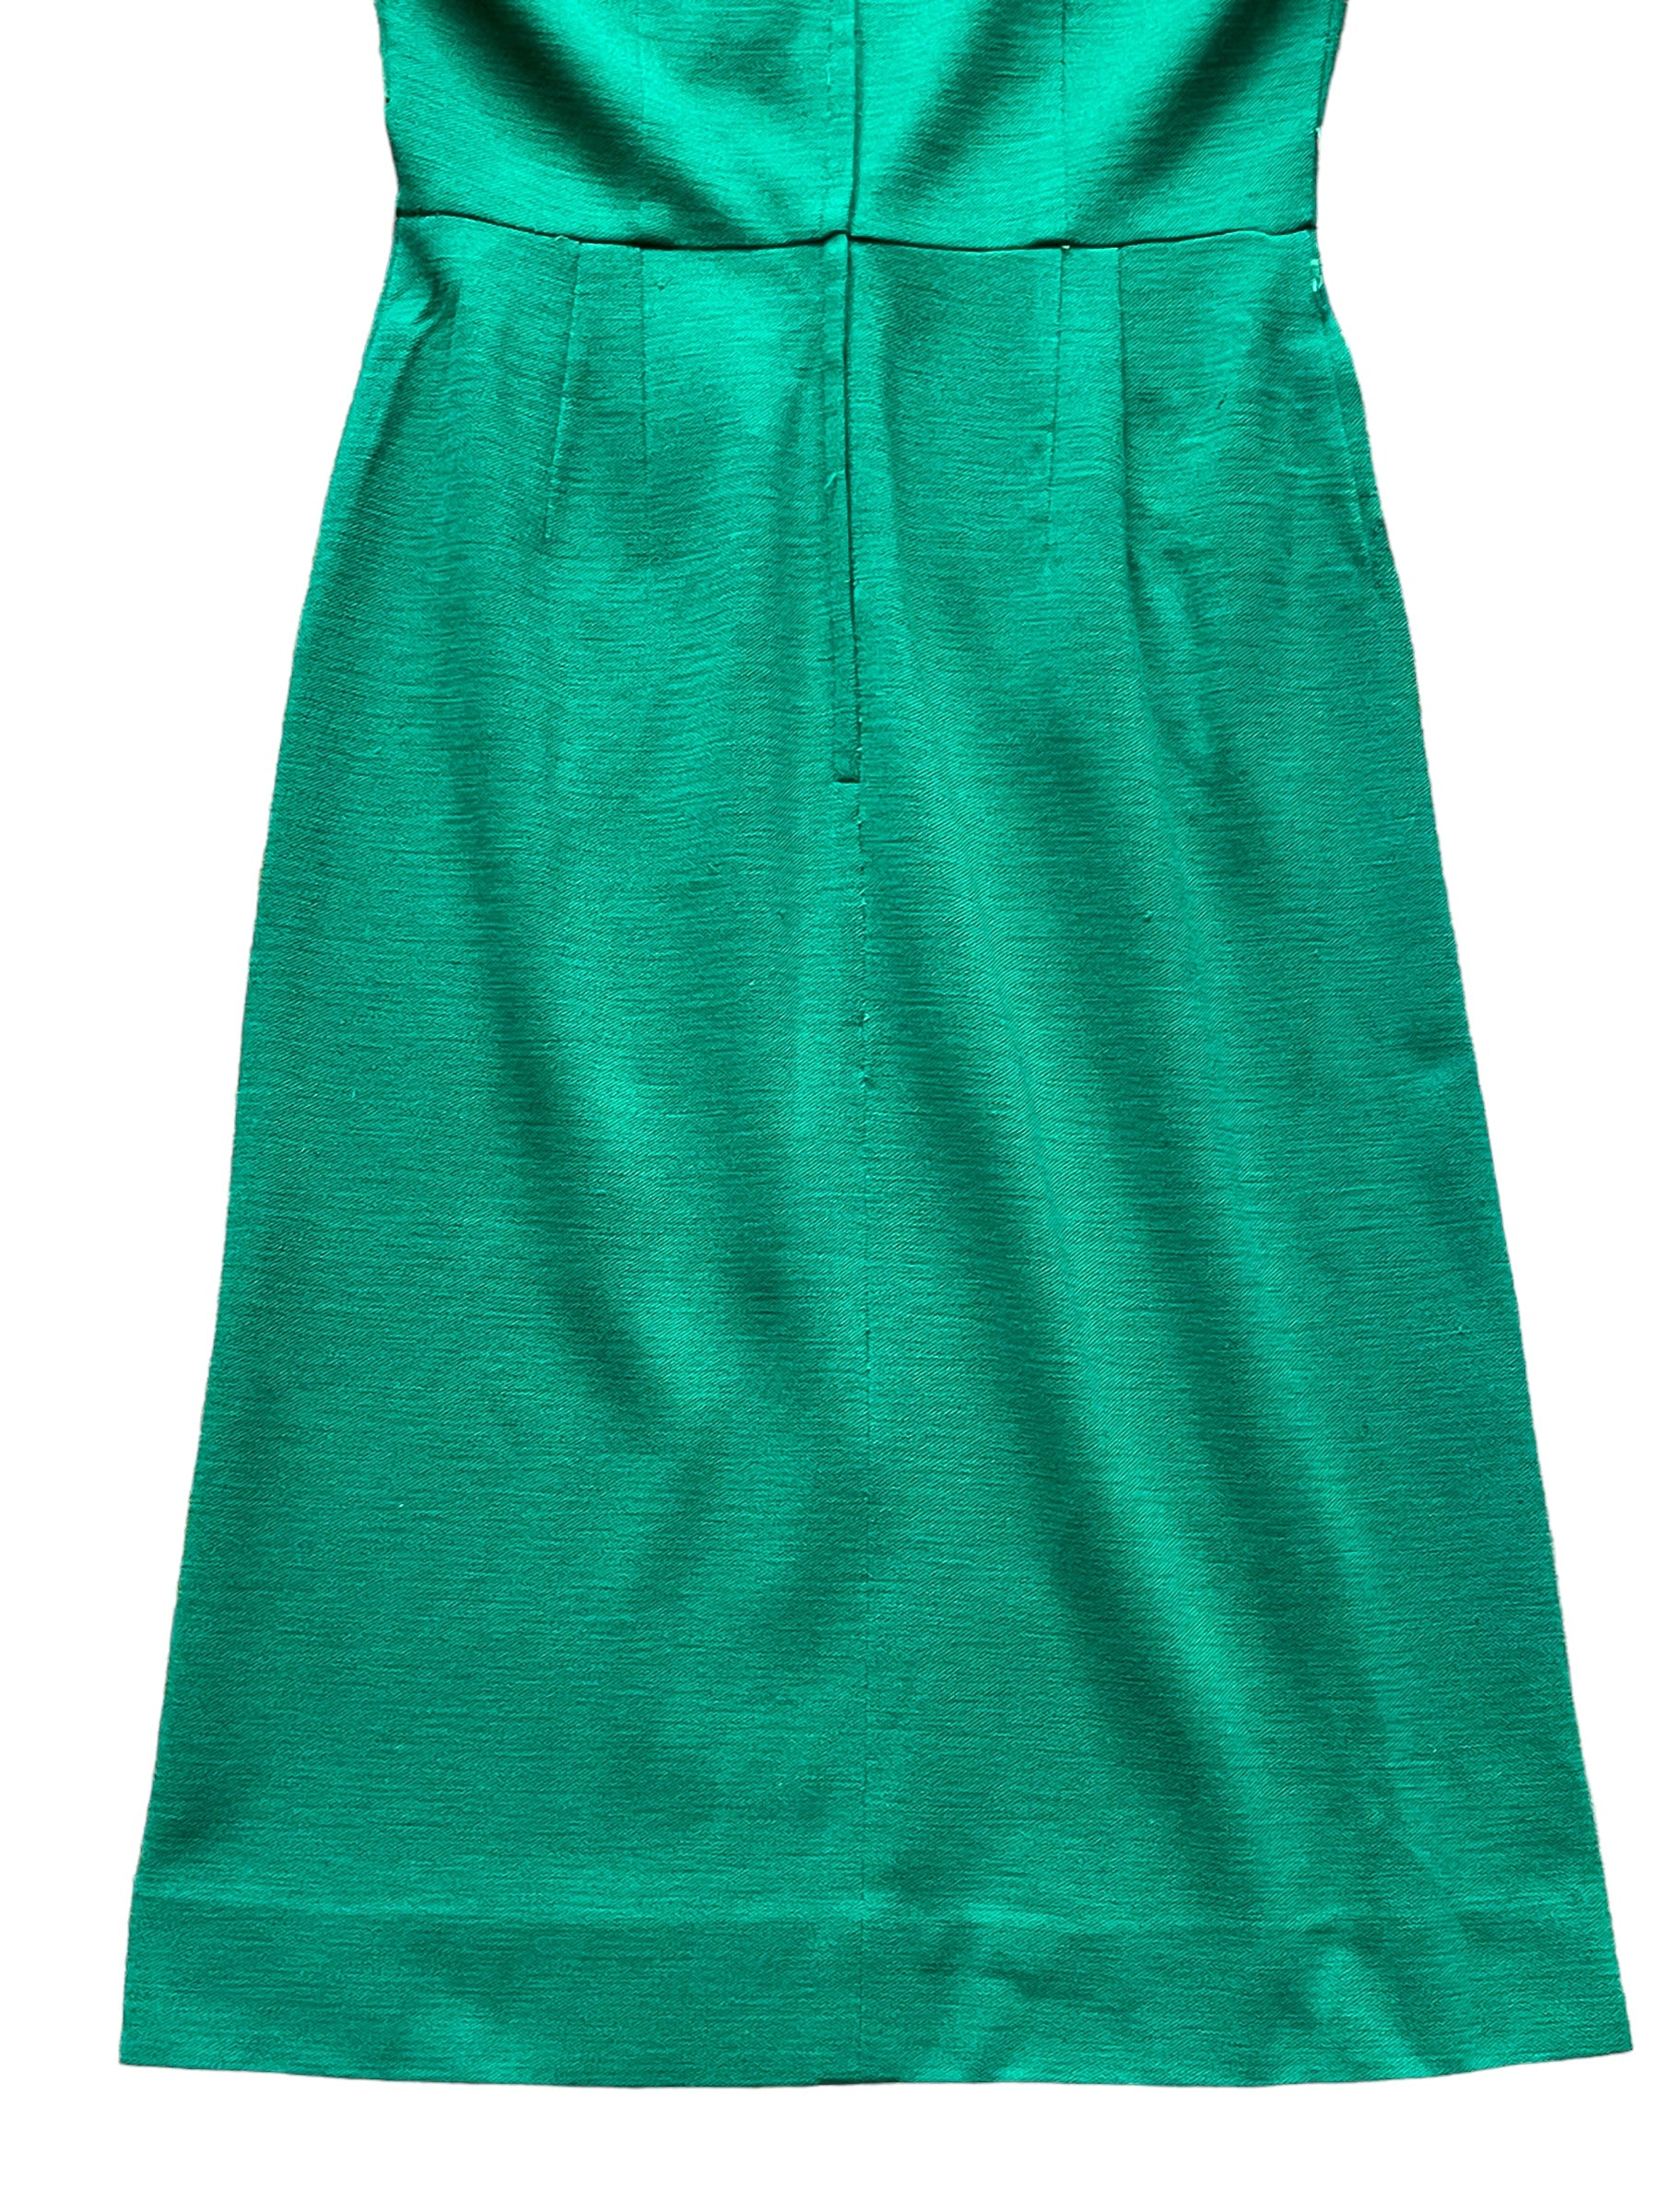 Back skirt view of Vintage 1950s Green Wool Wiggle Dress SZ M |  Barn Owl Vintage Dresses| Seattle Vintage Ladies Clothing